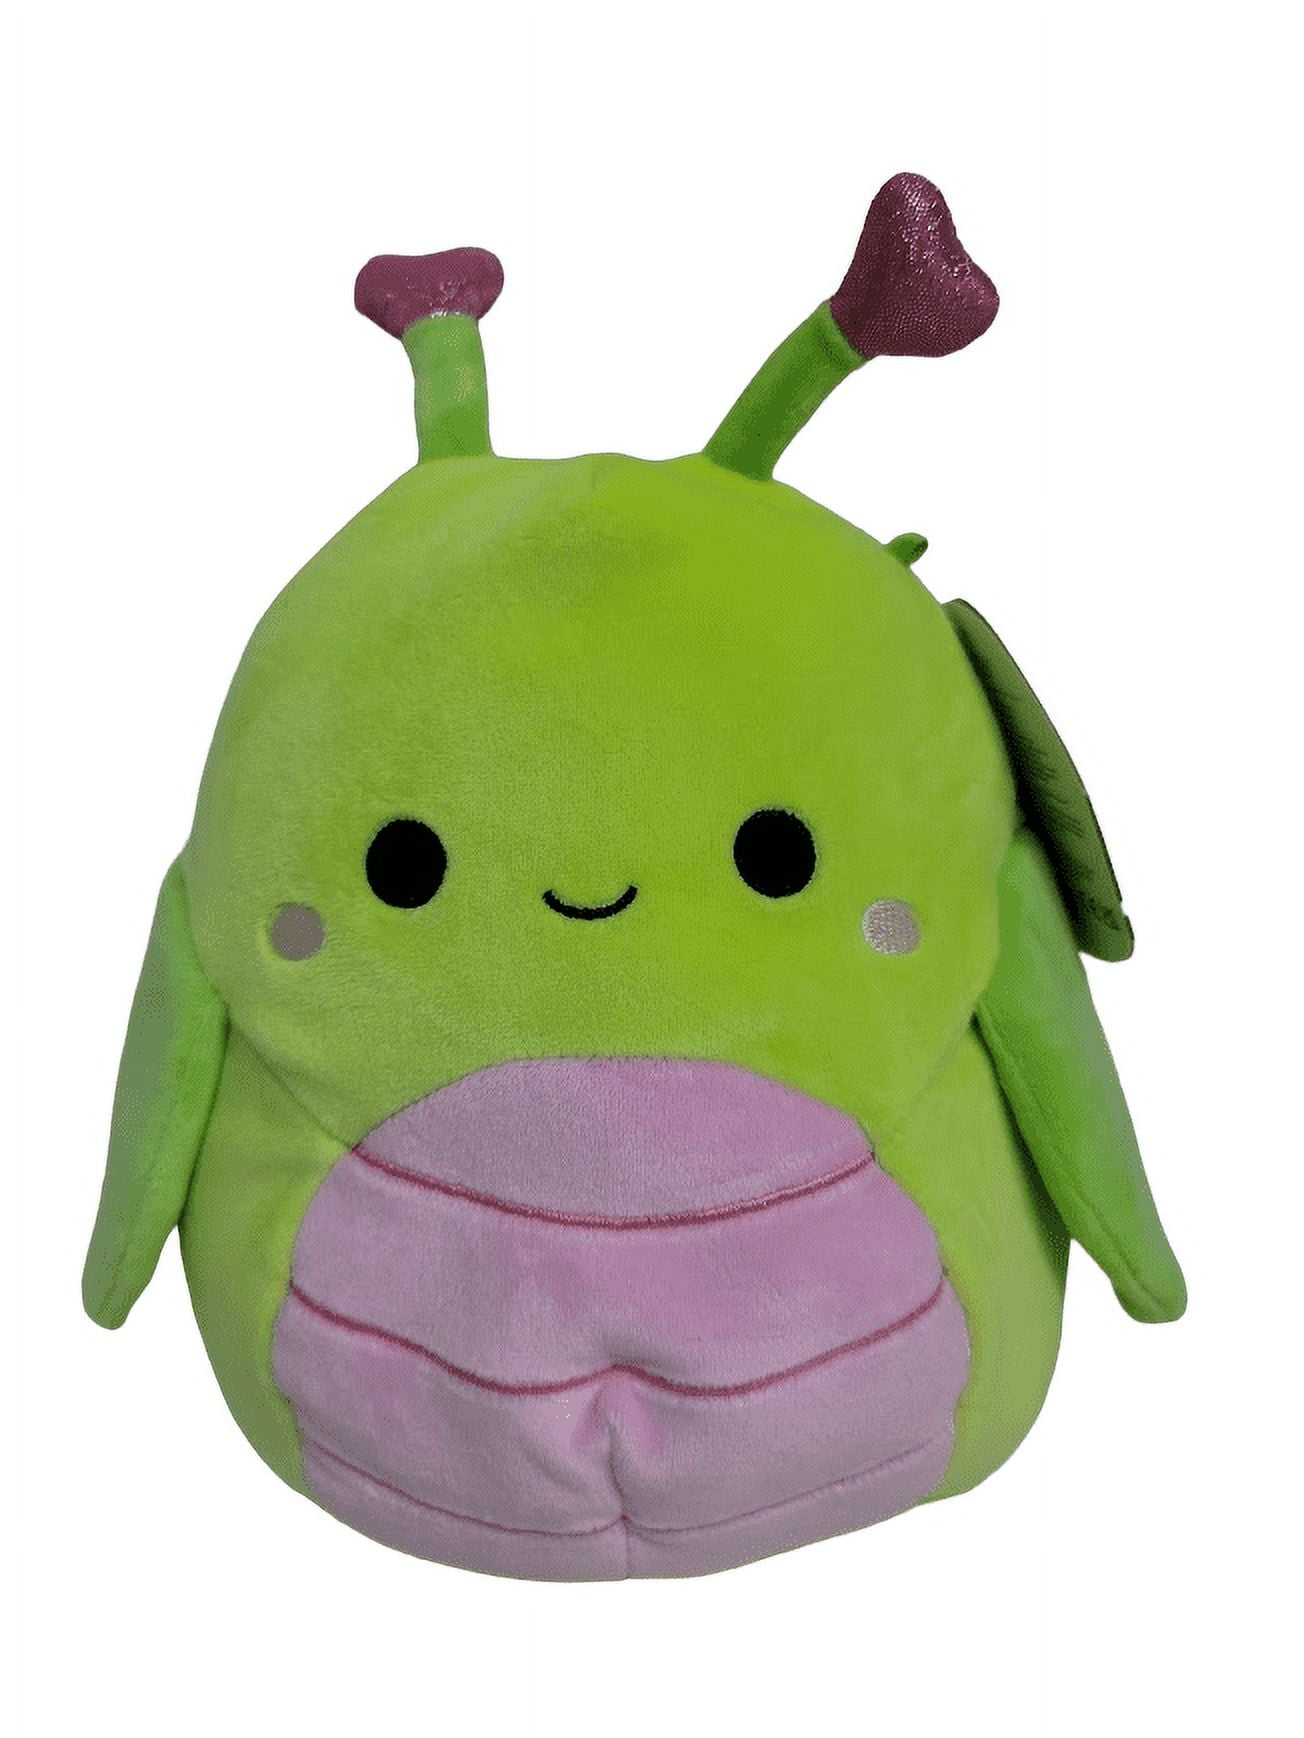  Squishmallow Grasshopper 20 cm (8 inch) Pilar Green Plush  Stuffed Animal Super Soft Cuddle Pillow : Toys & Games